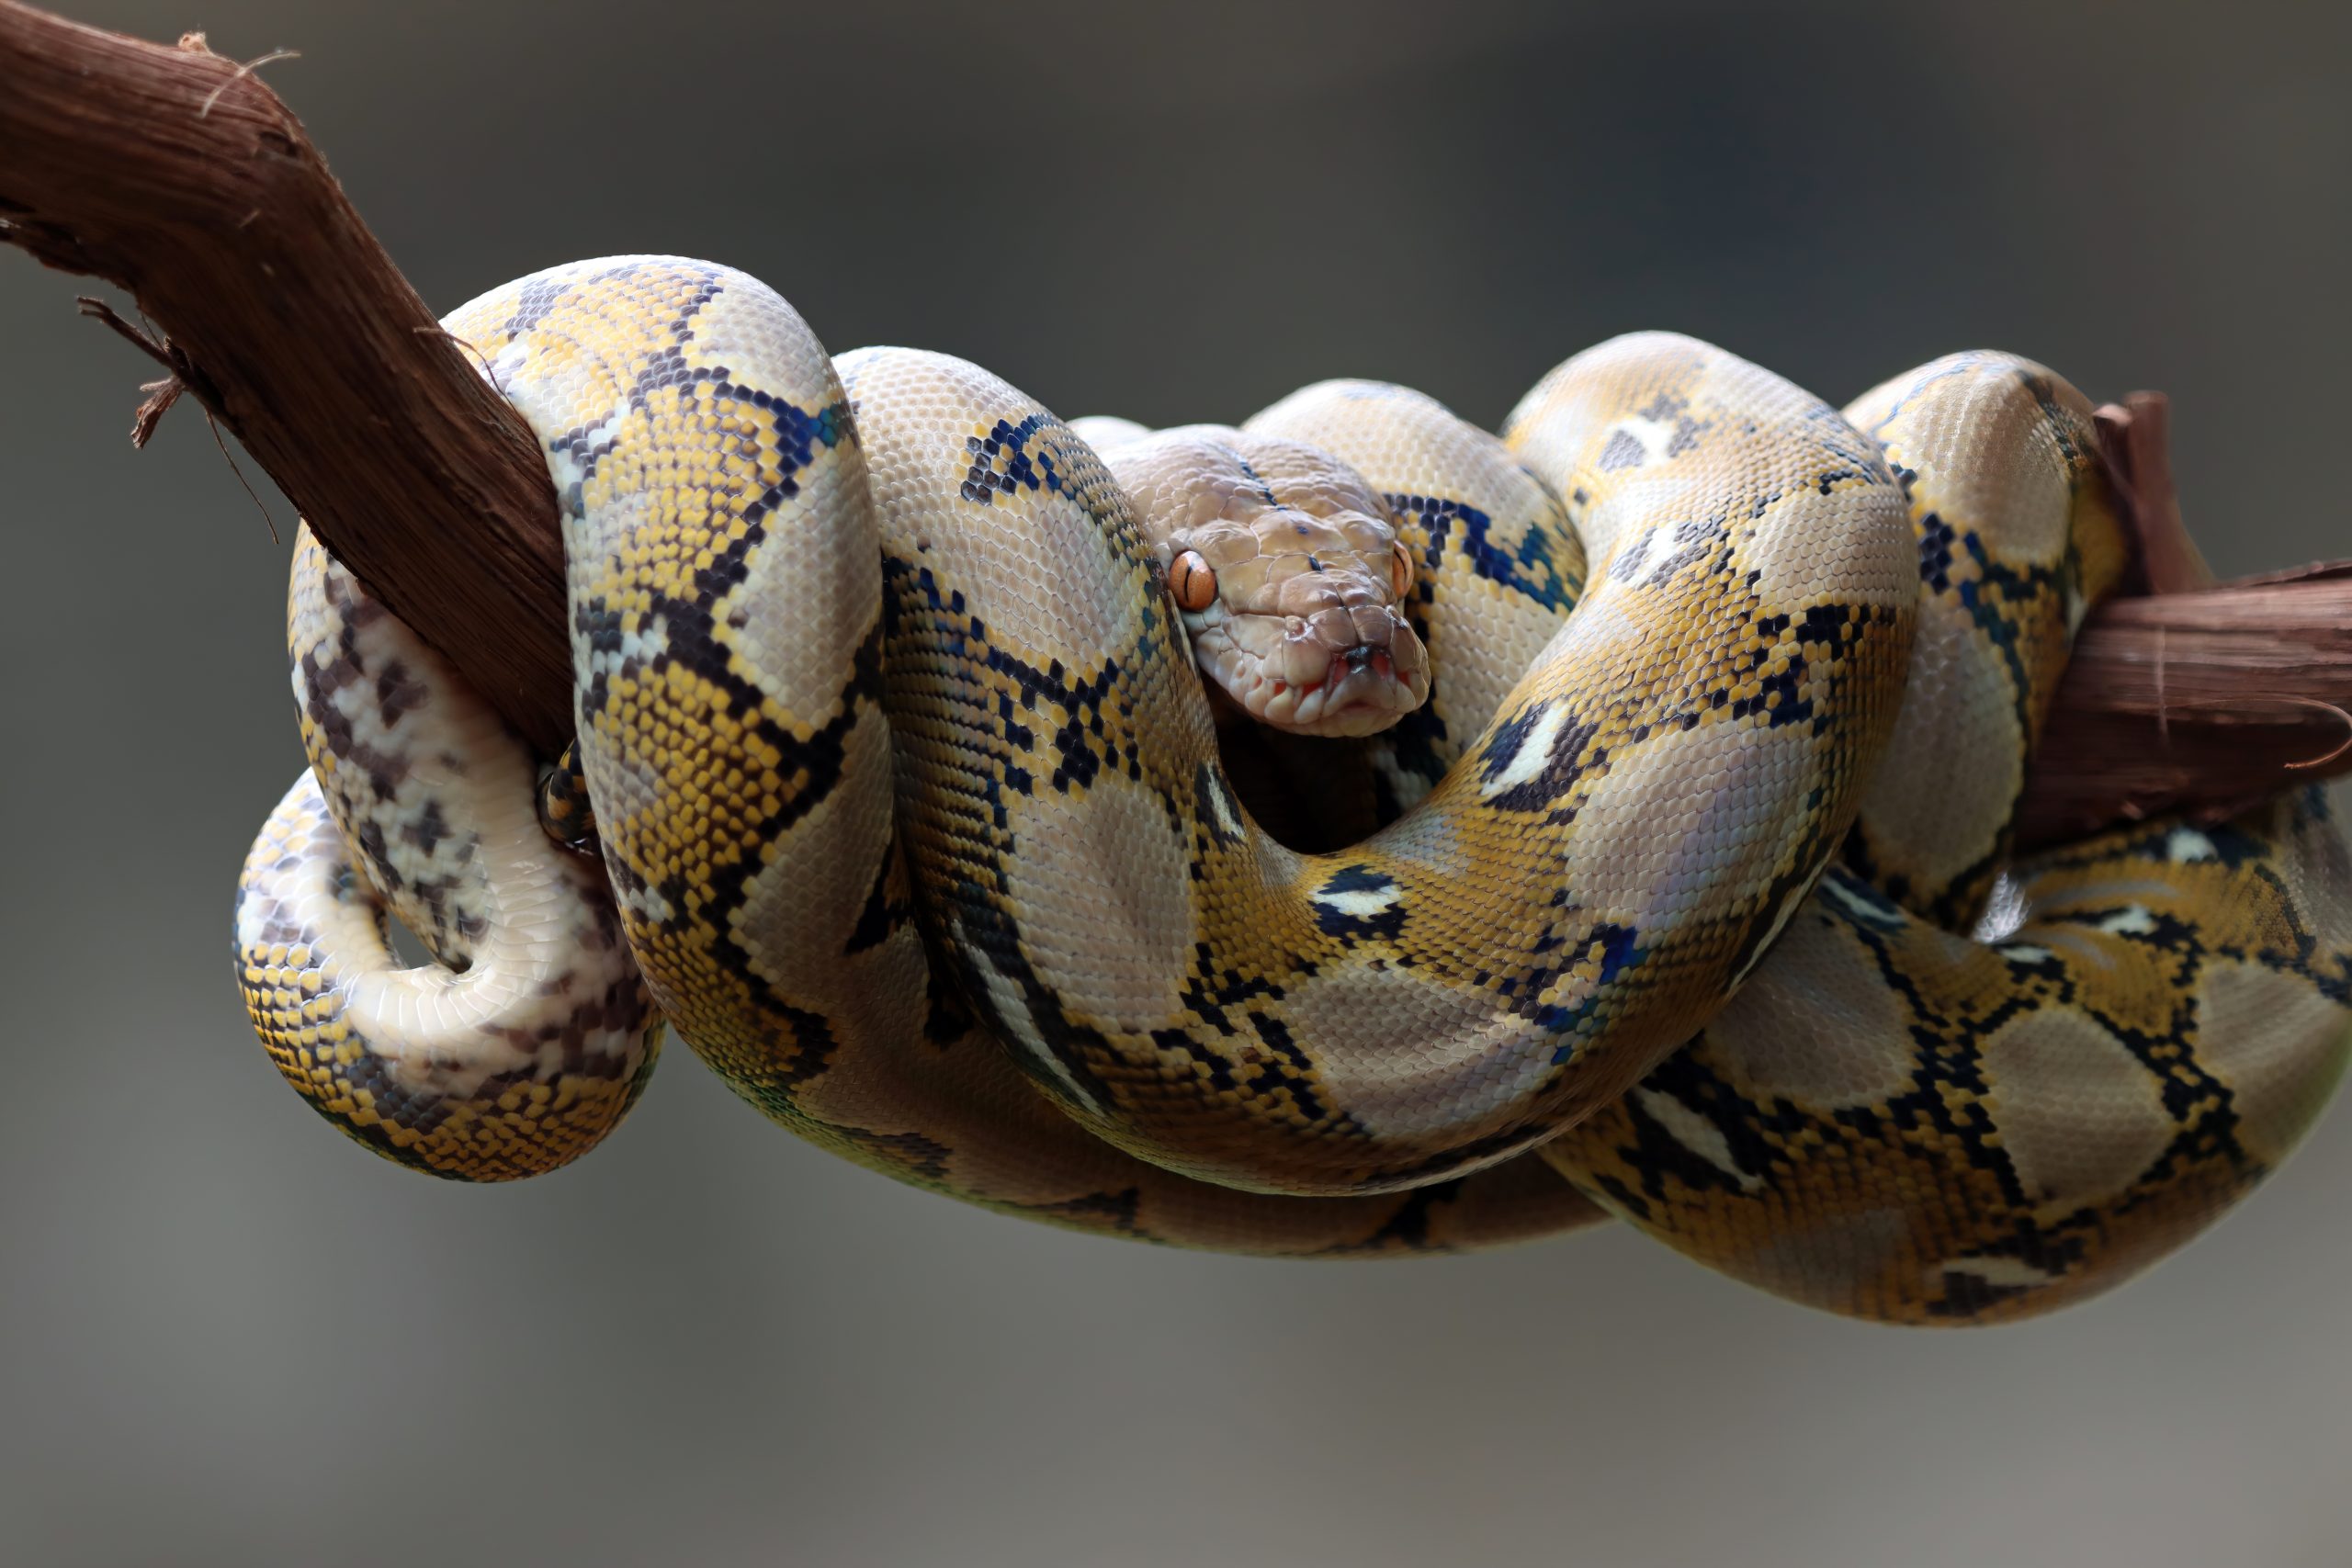 Are ball python safe?